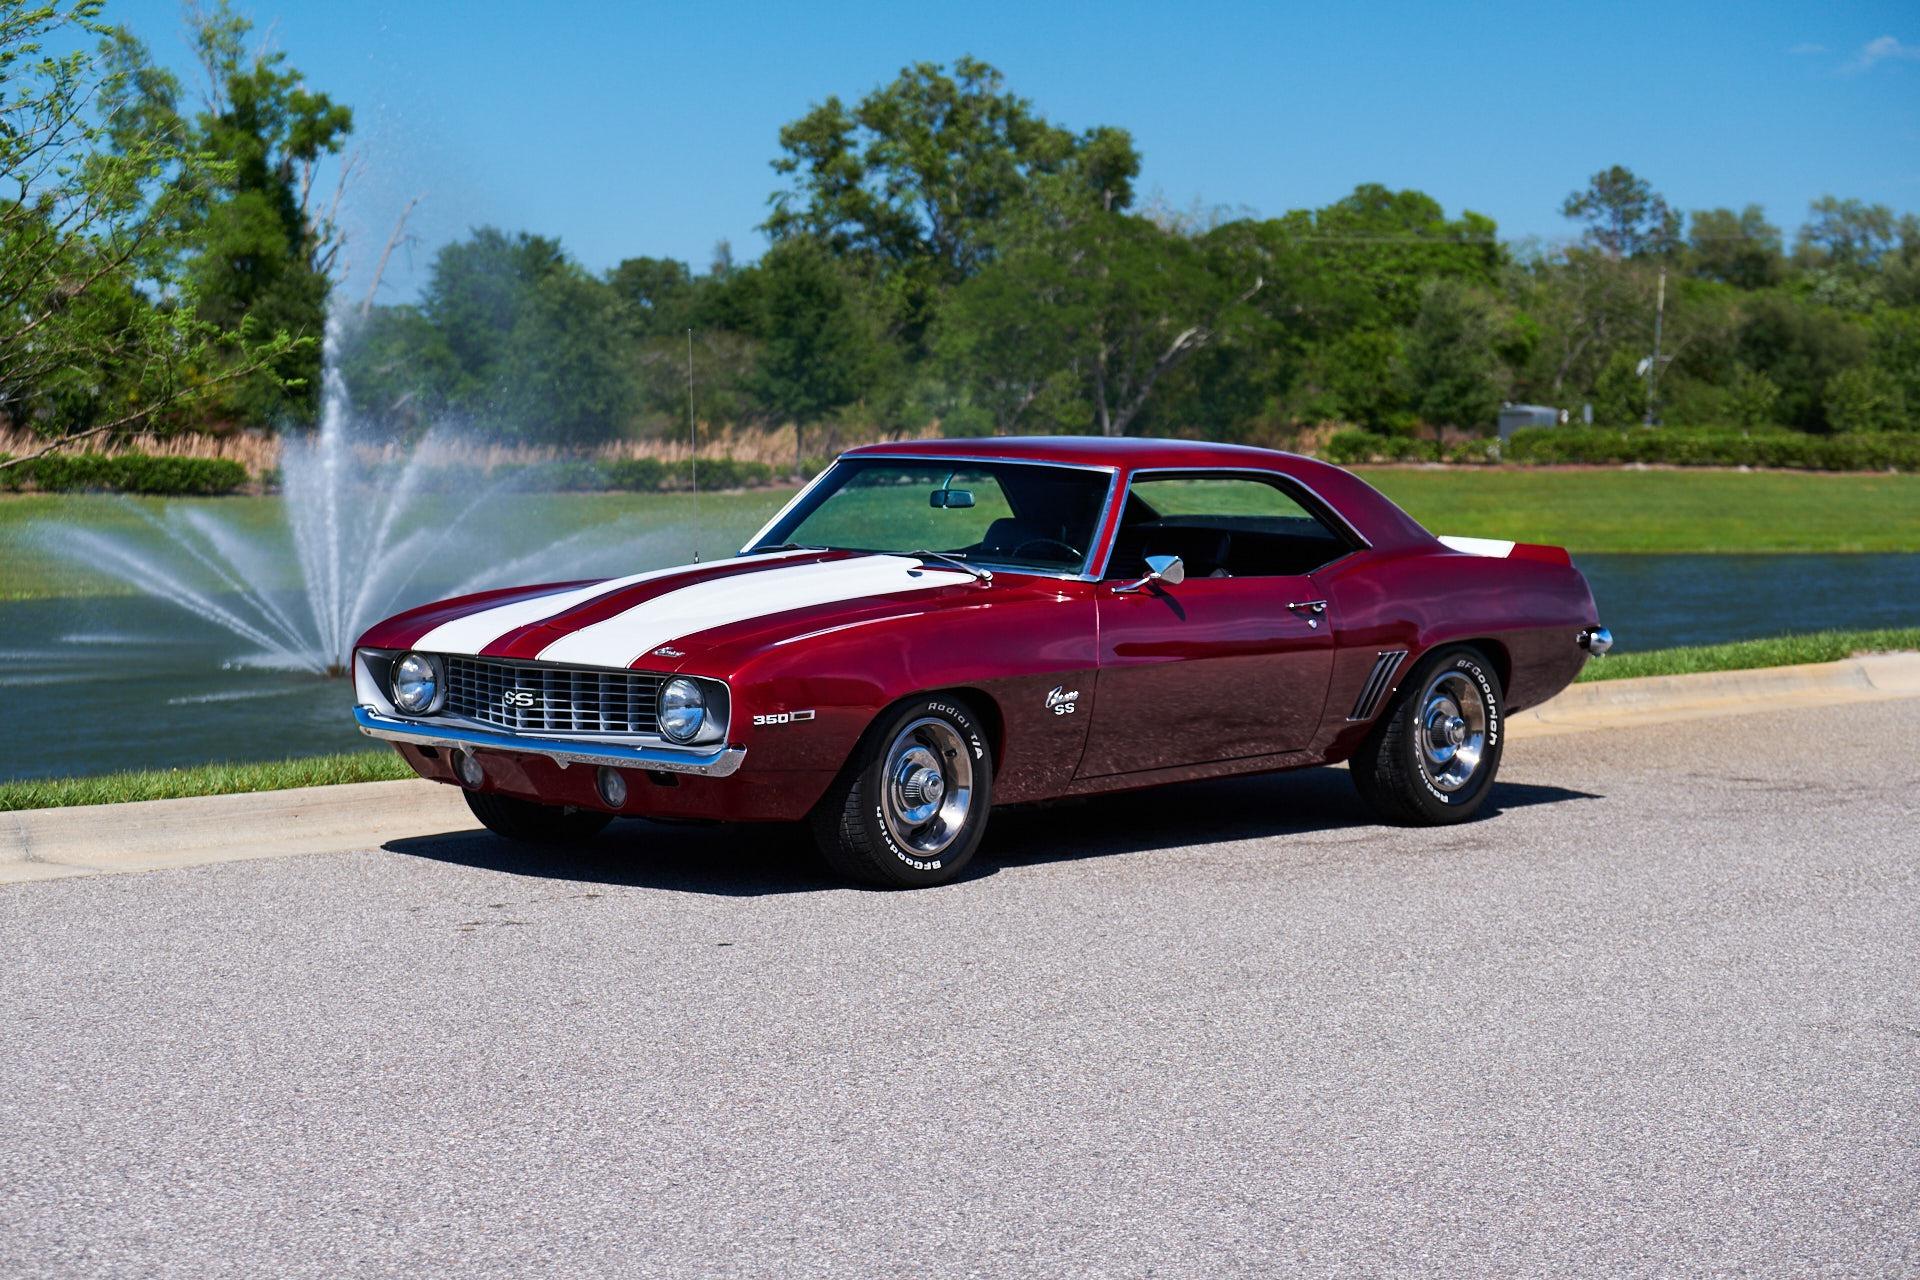 The 1969 Chevrolet SSR photos